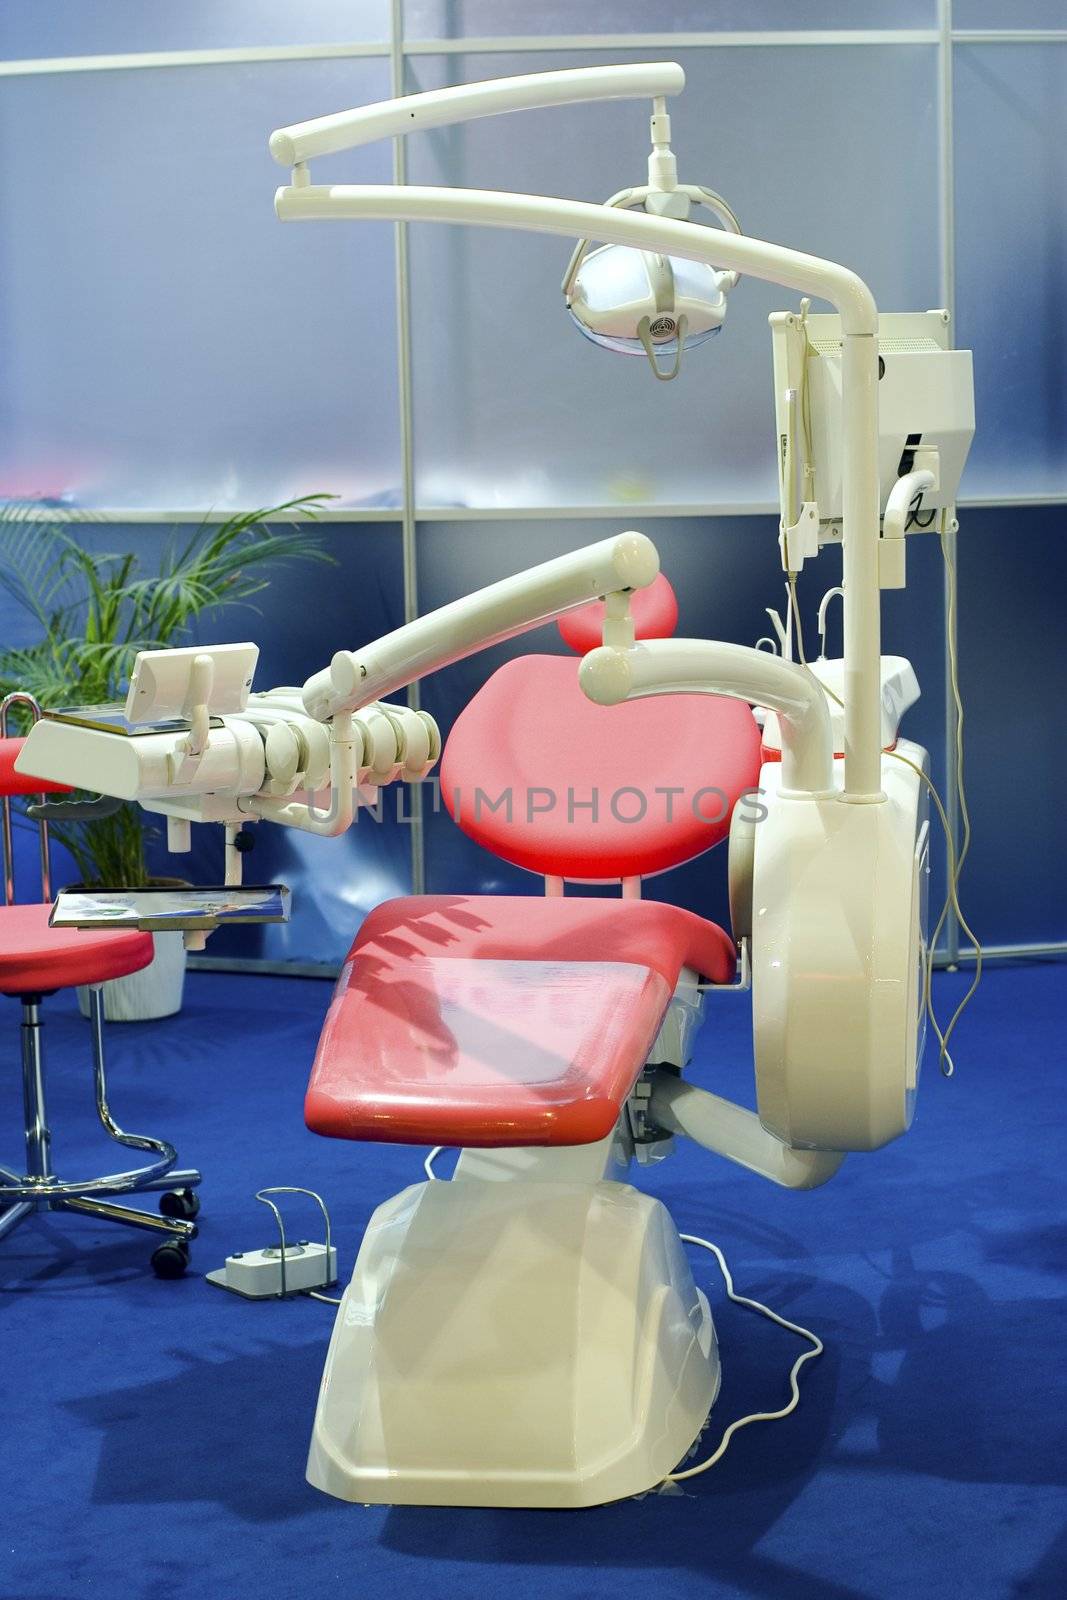 dentist equipment by AlexKhrom